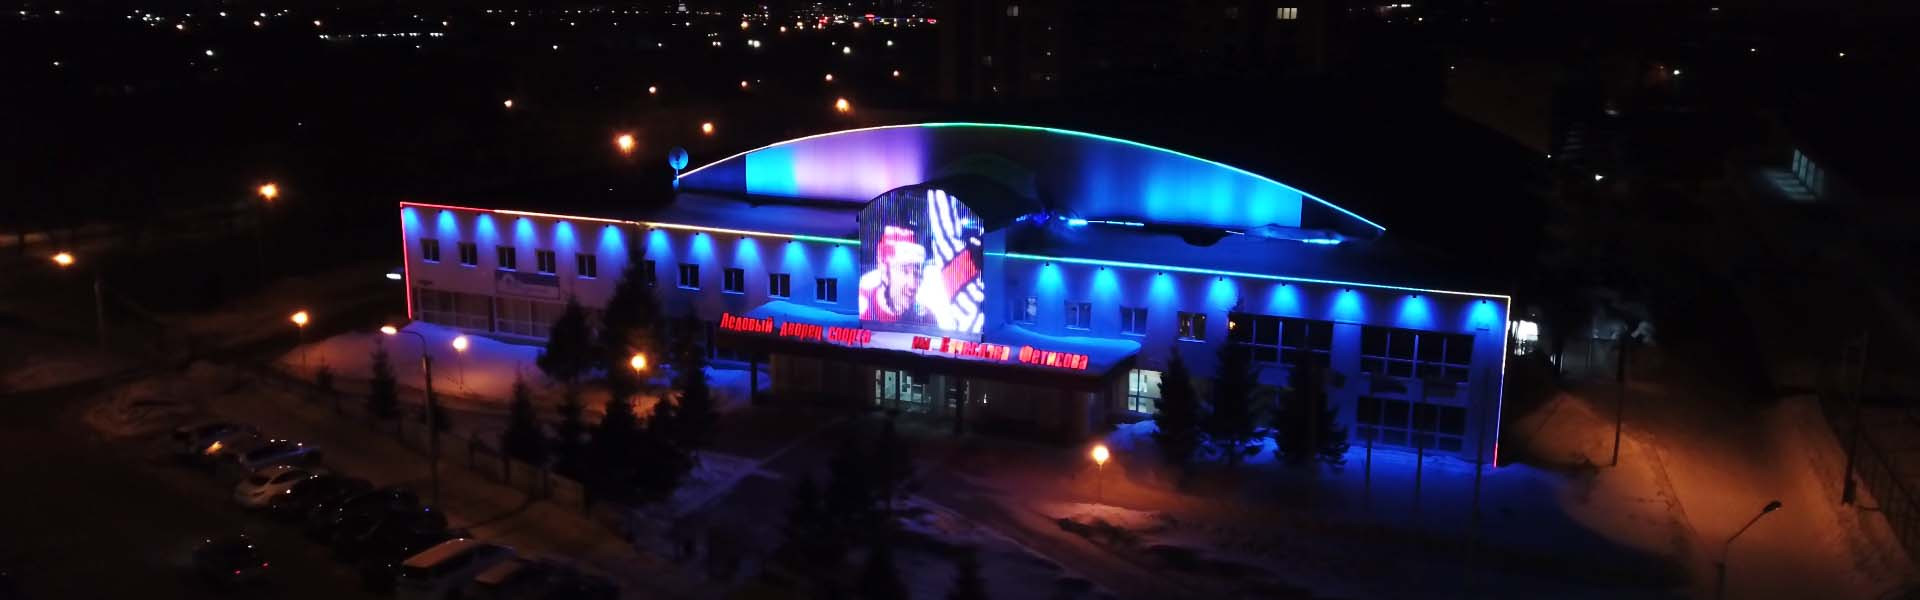 Архитектурное освещение ледового дворца спорта им. Вячеслава Фетисова